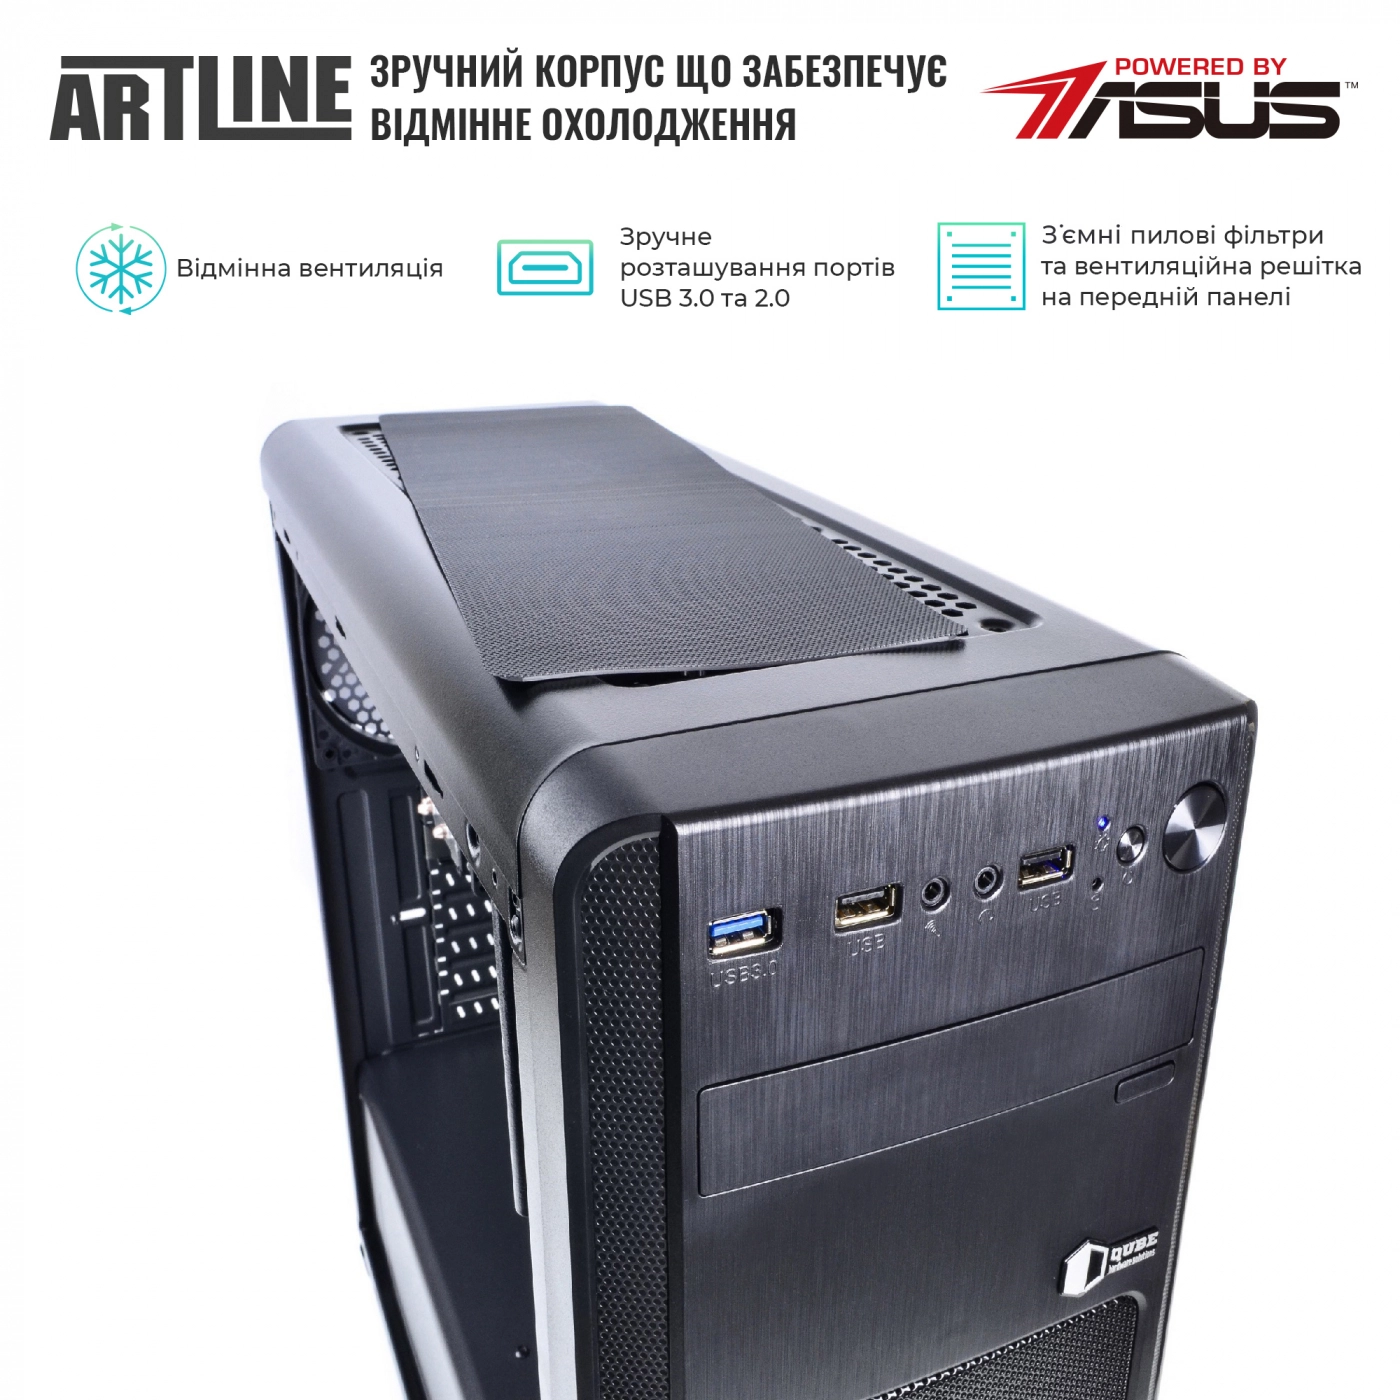 Купити Сервер ARTLINE Business T25v21 - фото 2